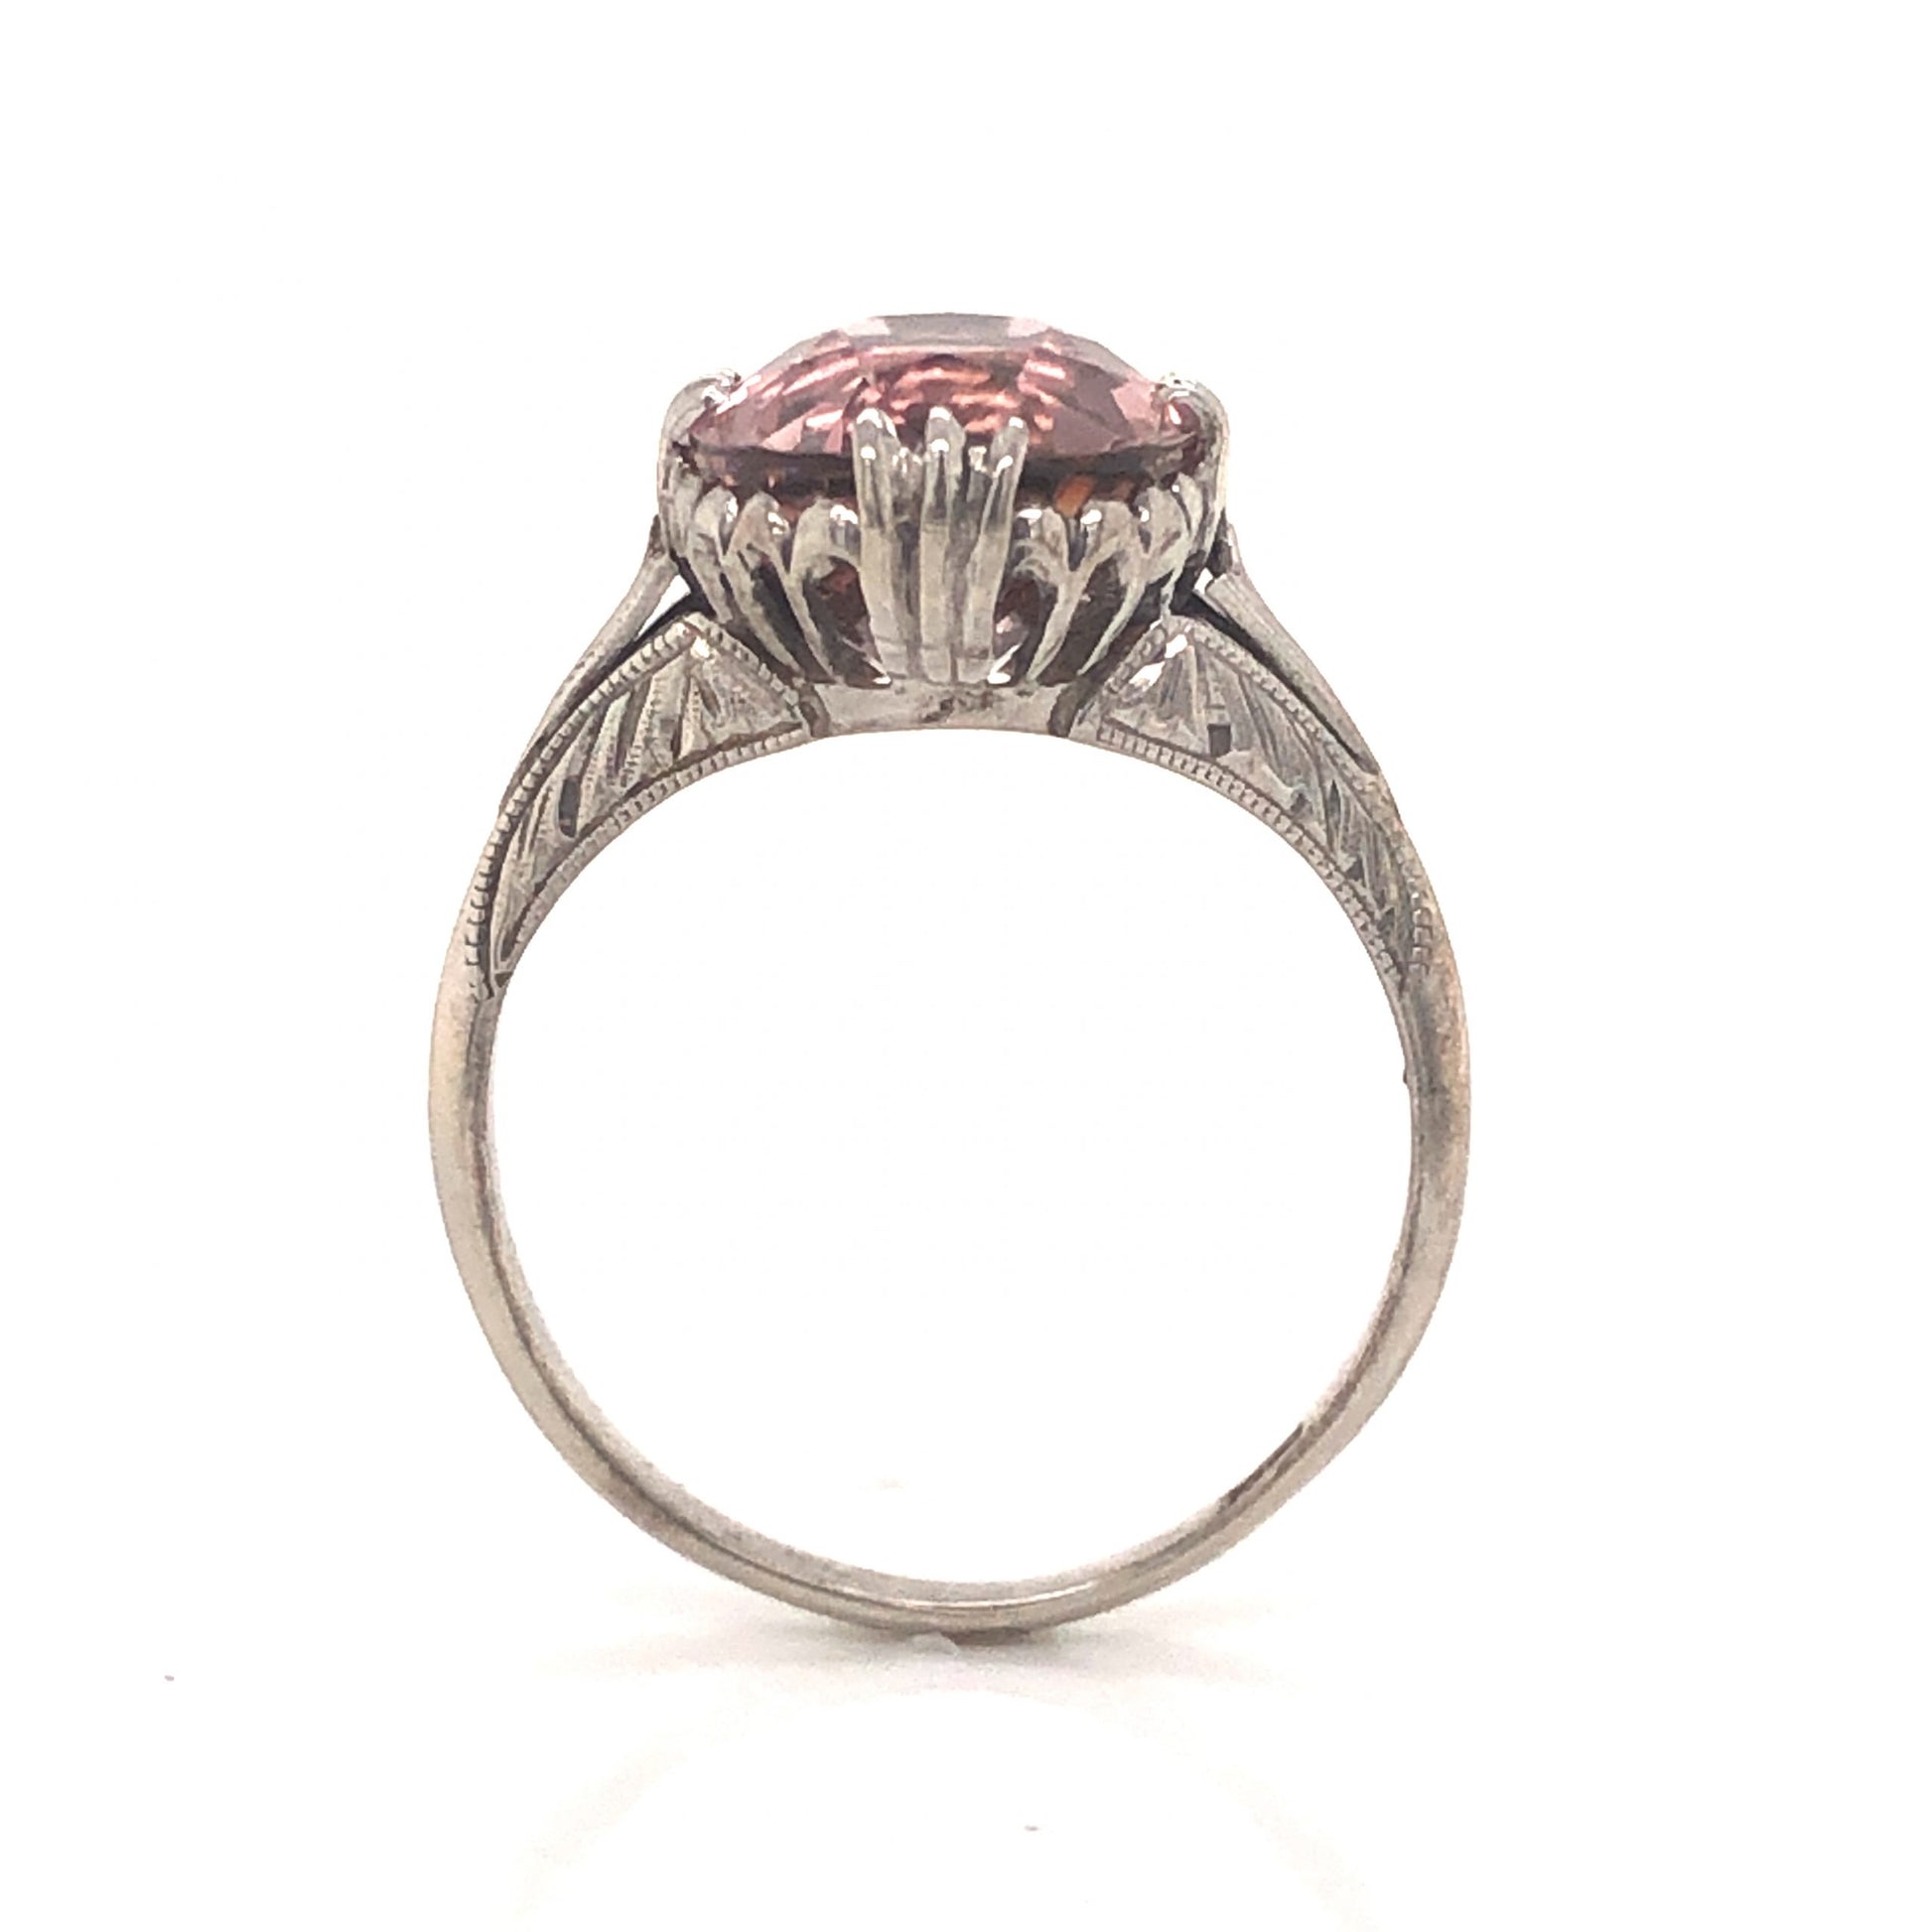 Art Deco Pink Tourmaline Ring in 14k White GoldComposition: 14 Karat White Gold Ring Size: 6 Total Gram Weight: 2.7 g Inscription: K14
      